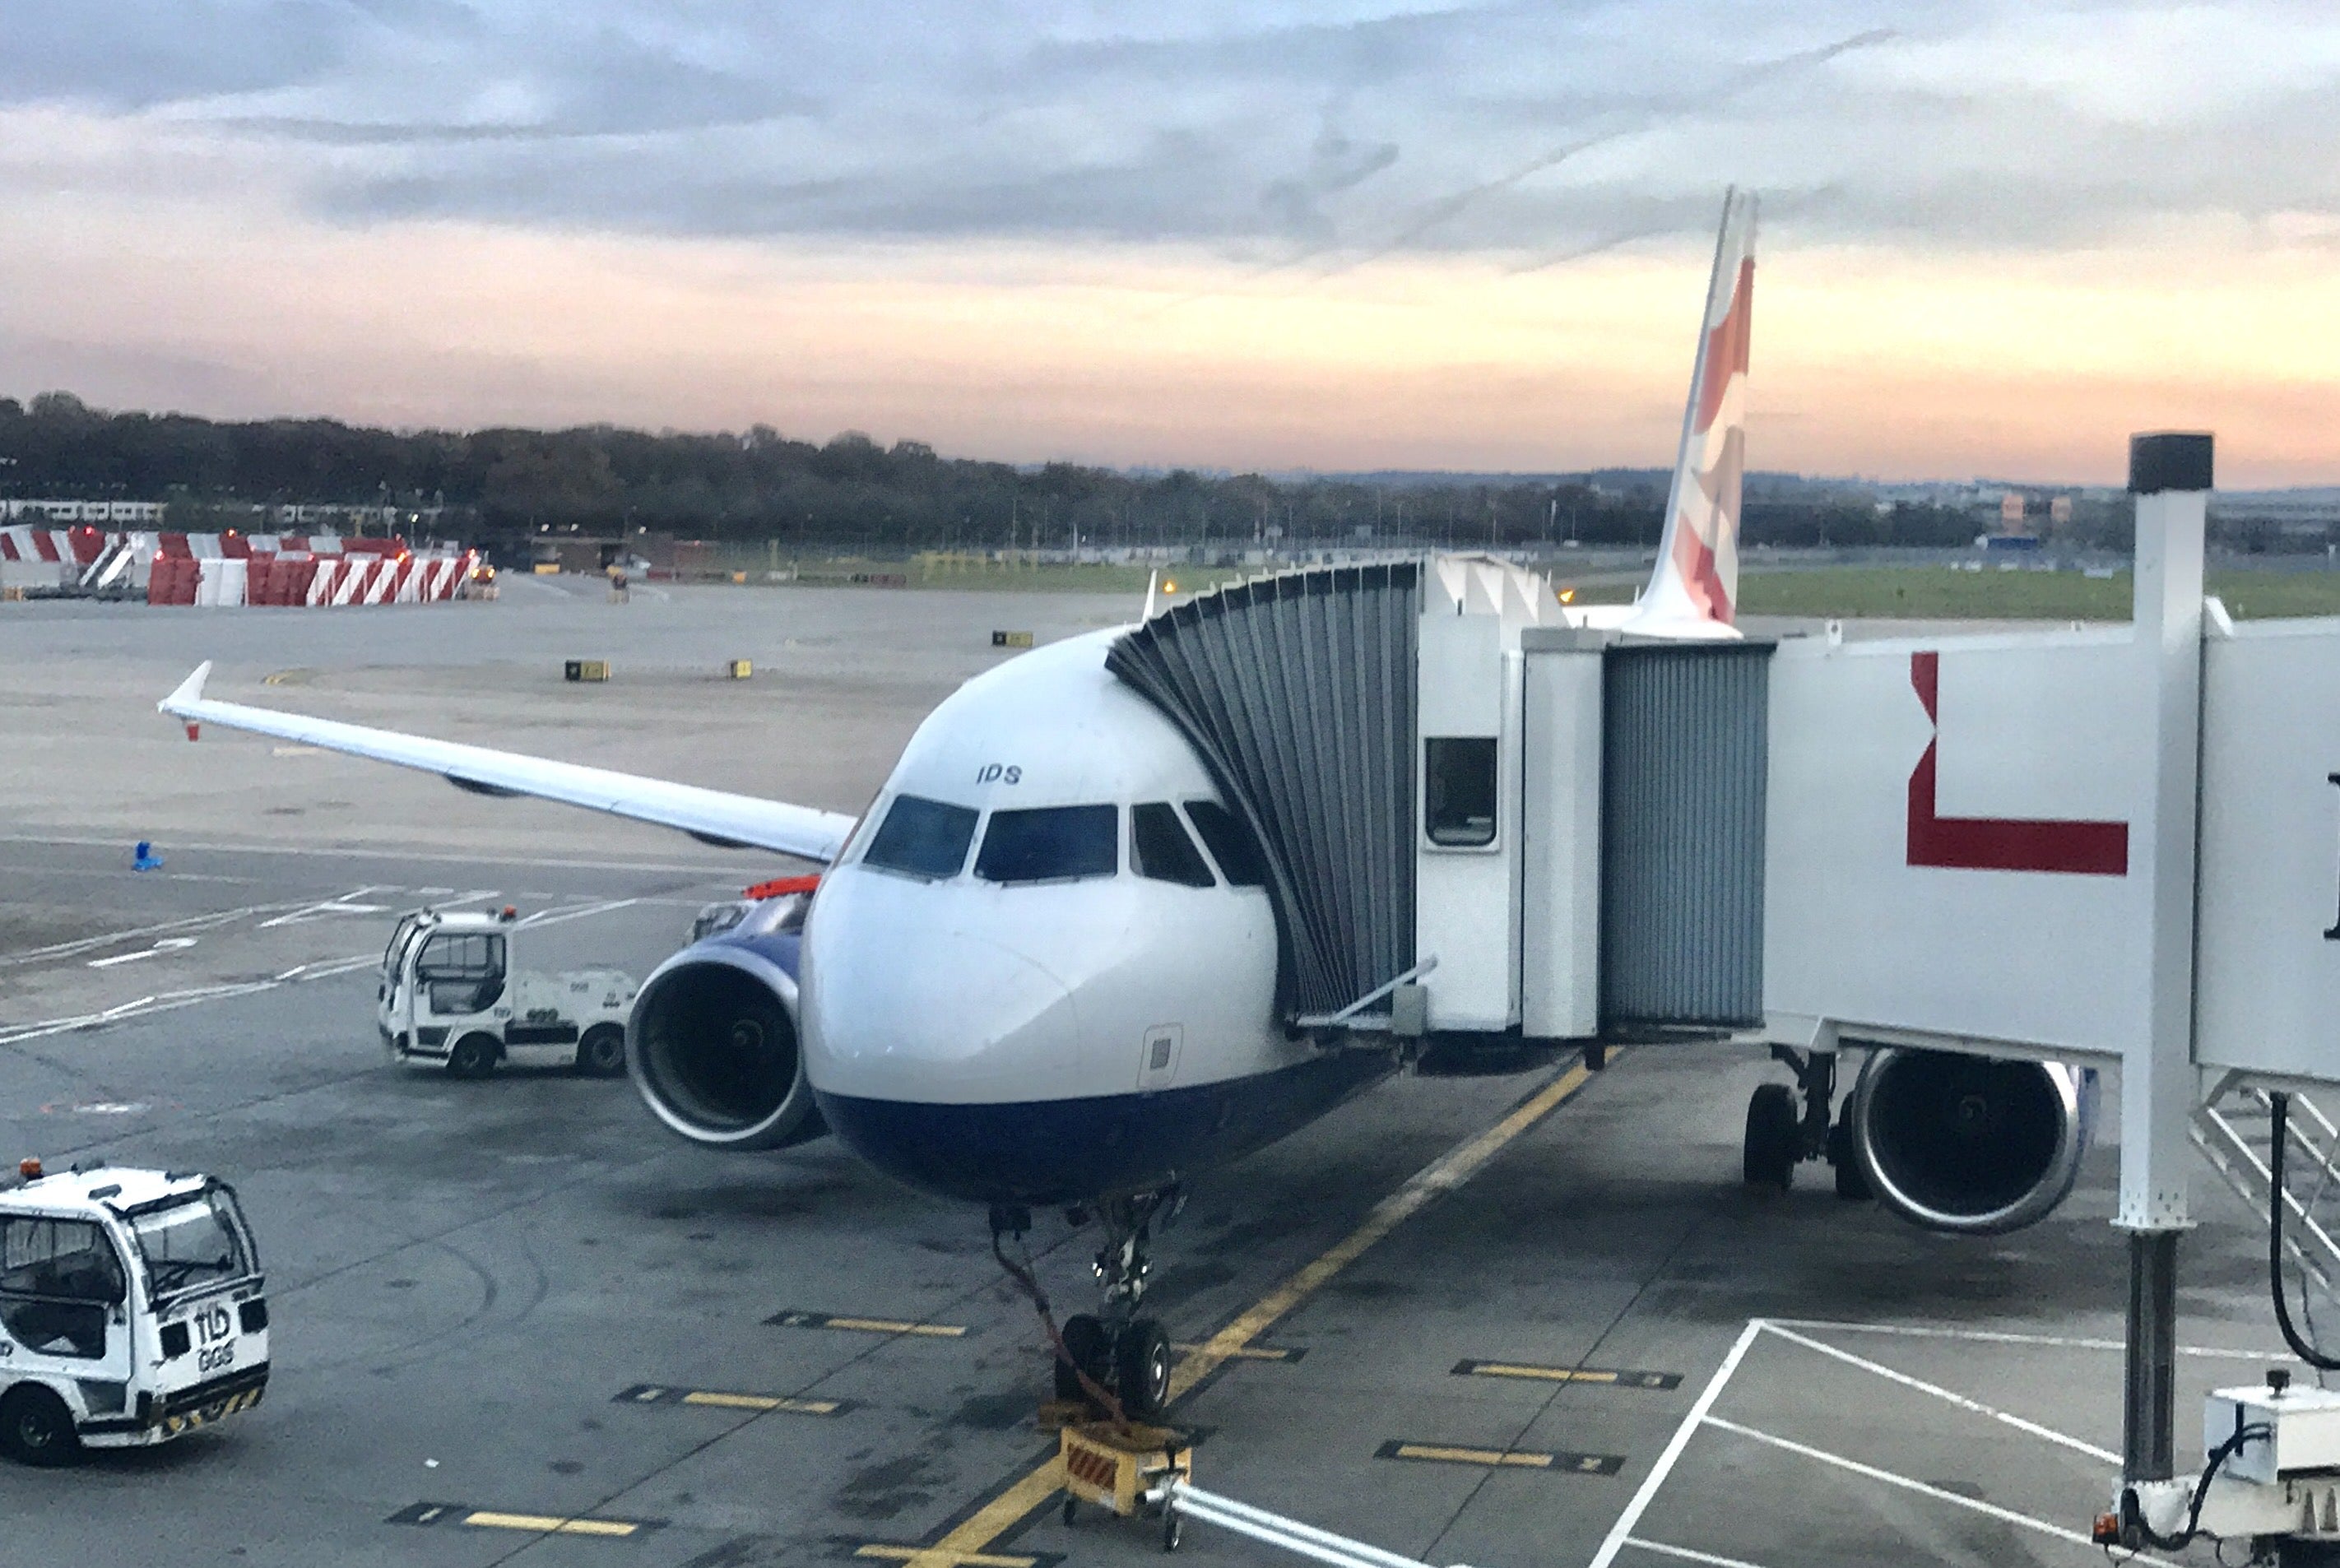 British Airways A320 Aircraft at London Gatwick Airport